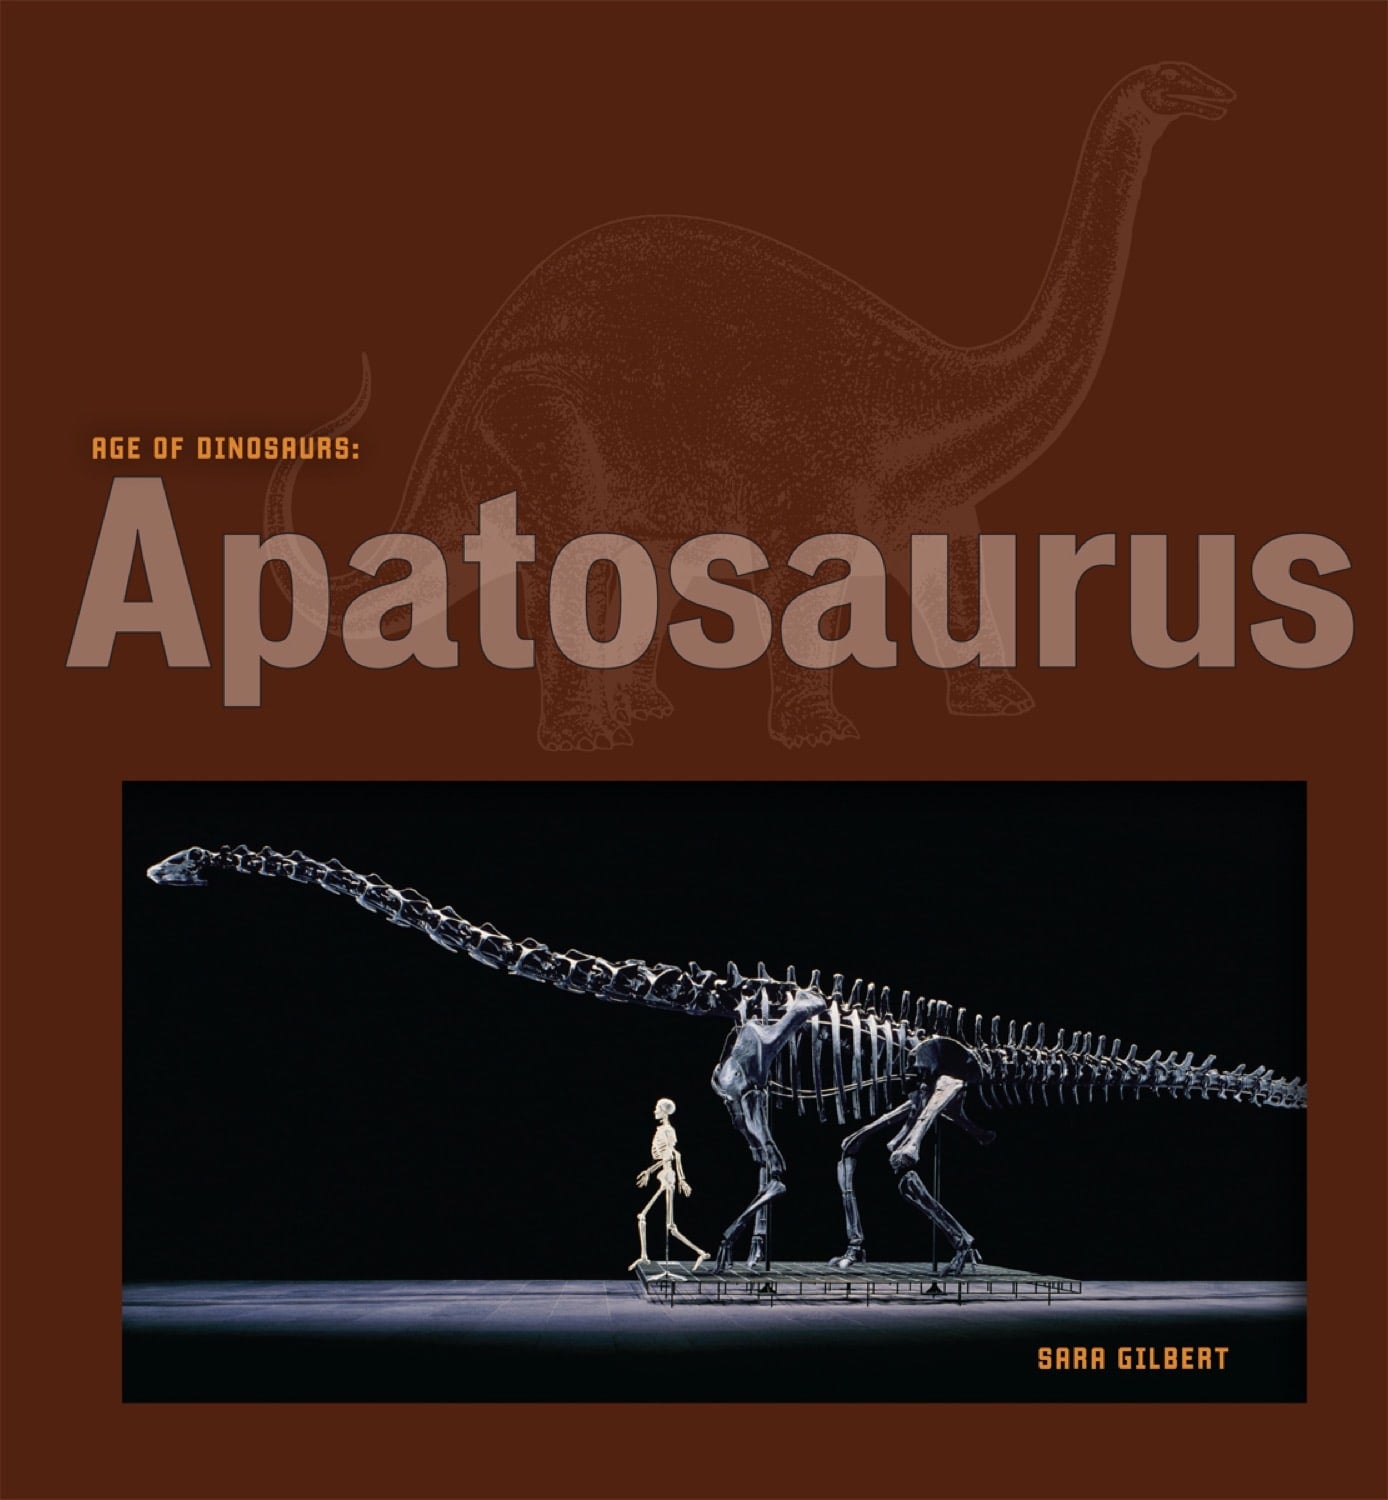 Age of Dinosaurs: Apatosaurus